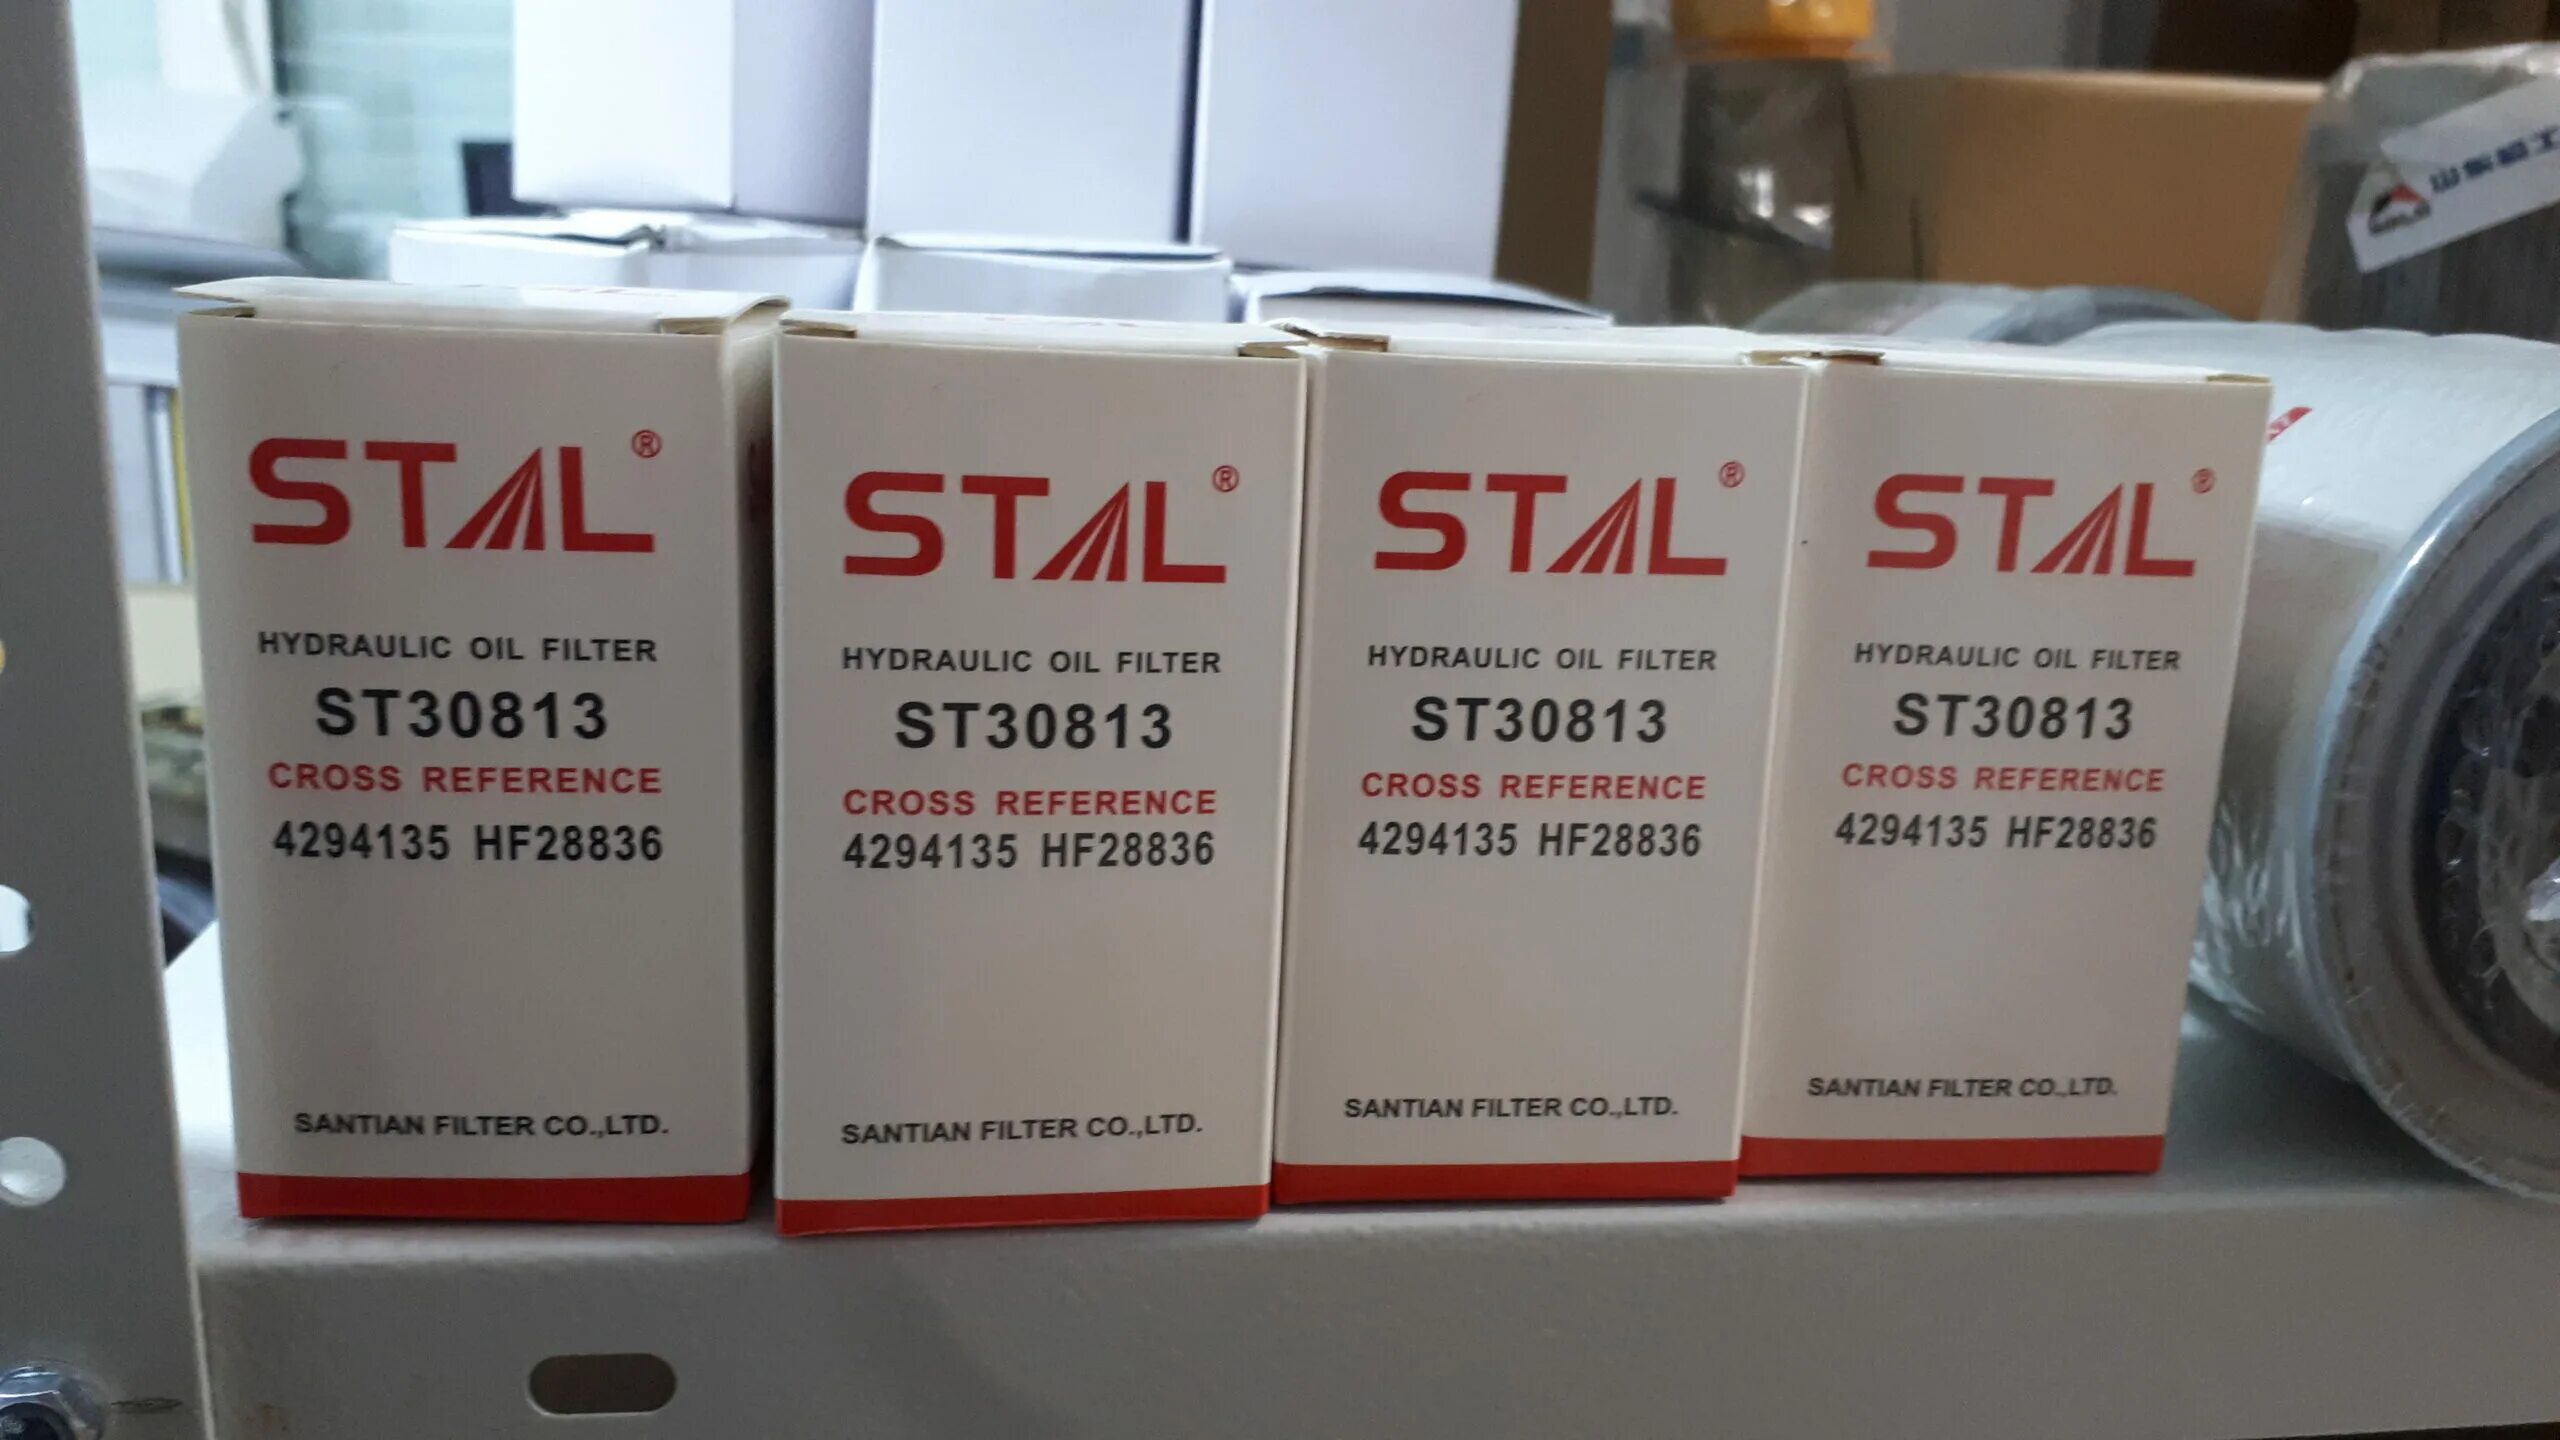 Stal st20169. Stal фильтры st41340ab. Stal st30890. Stal st20047. Stal product